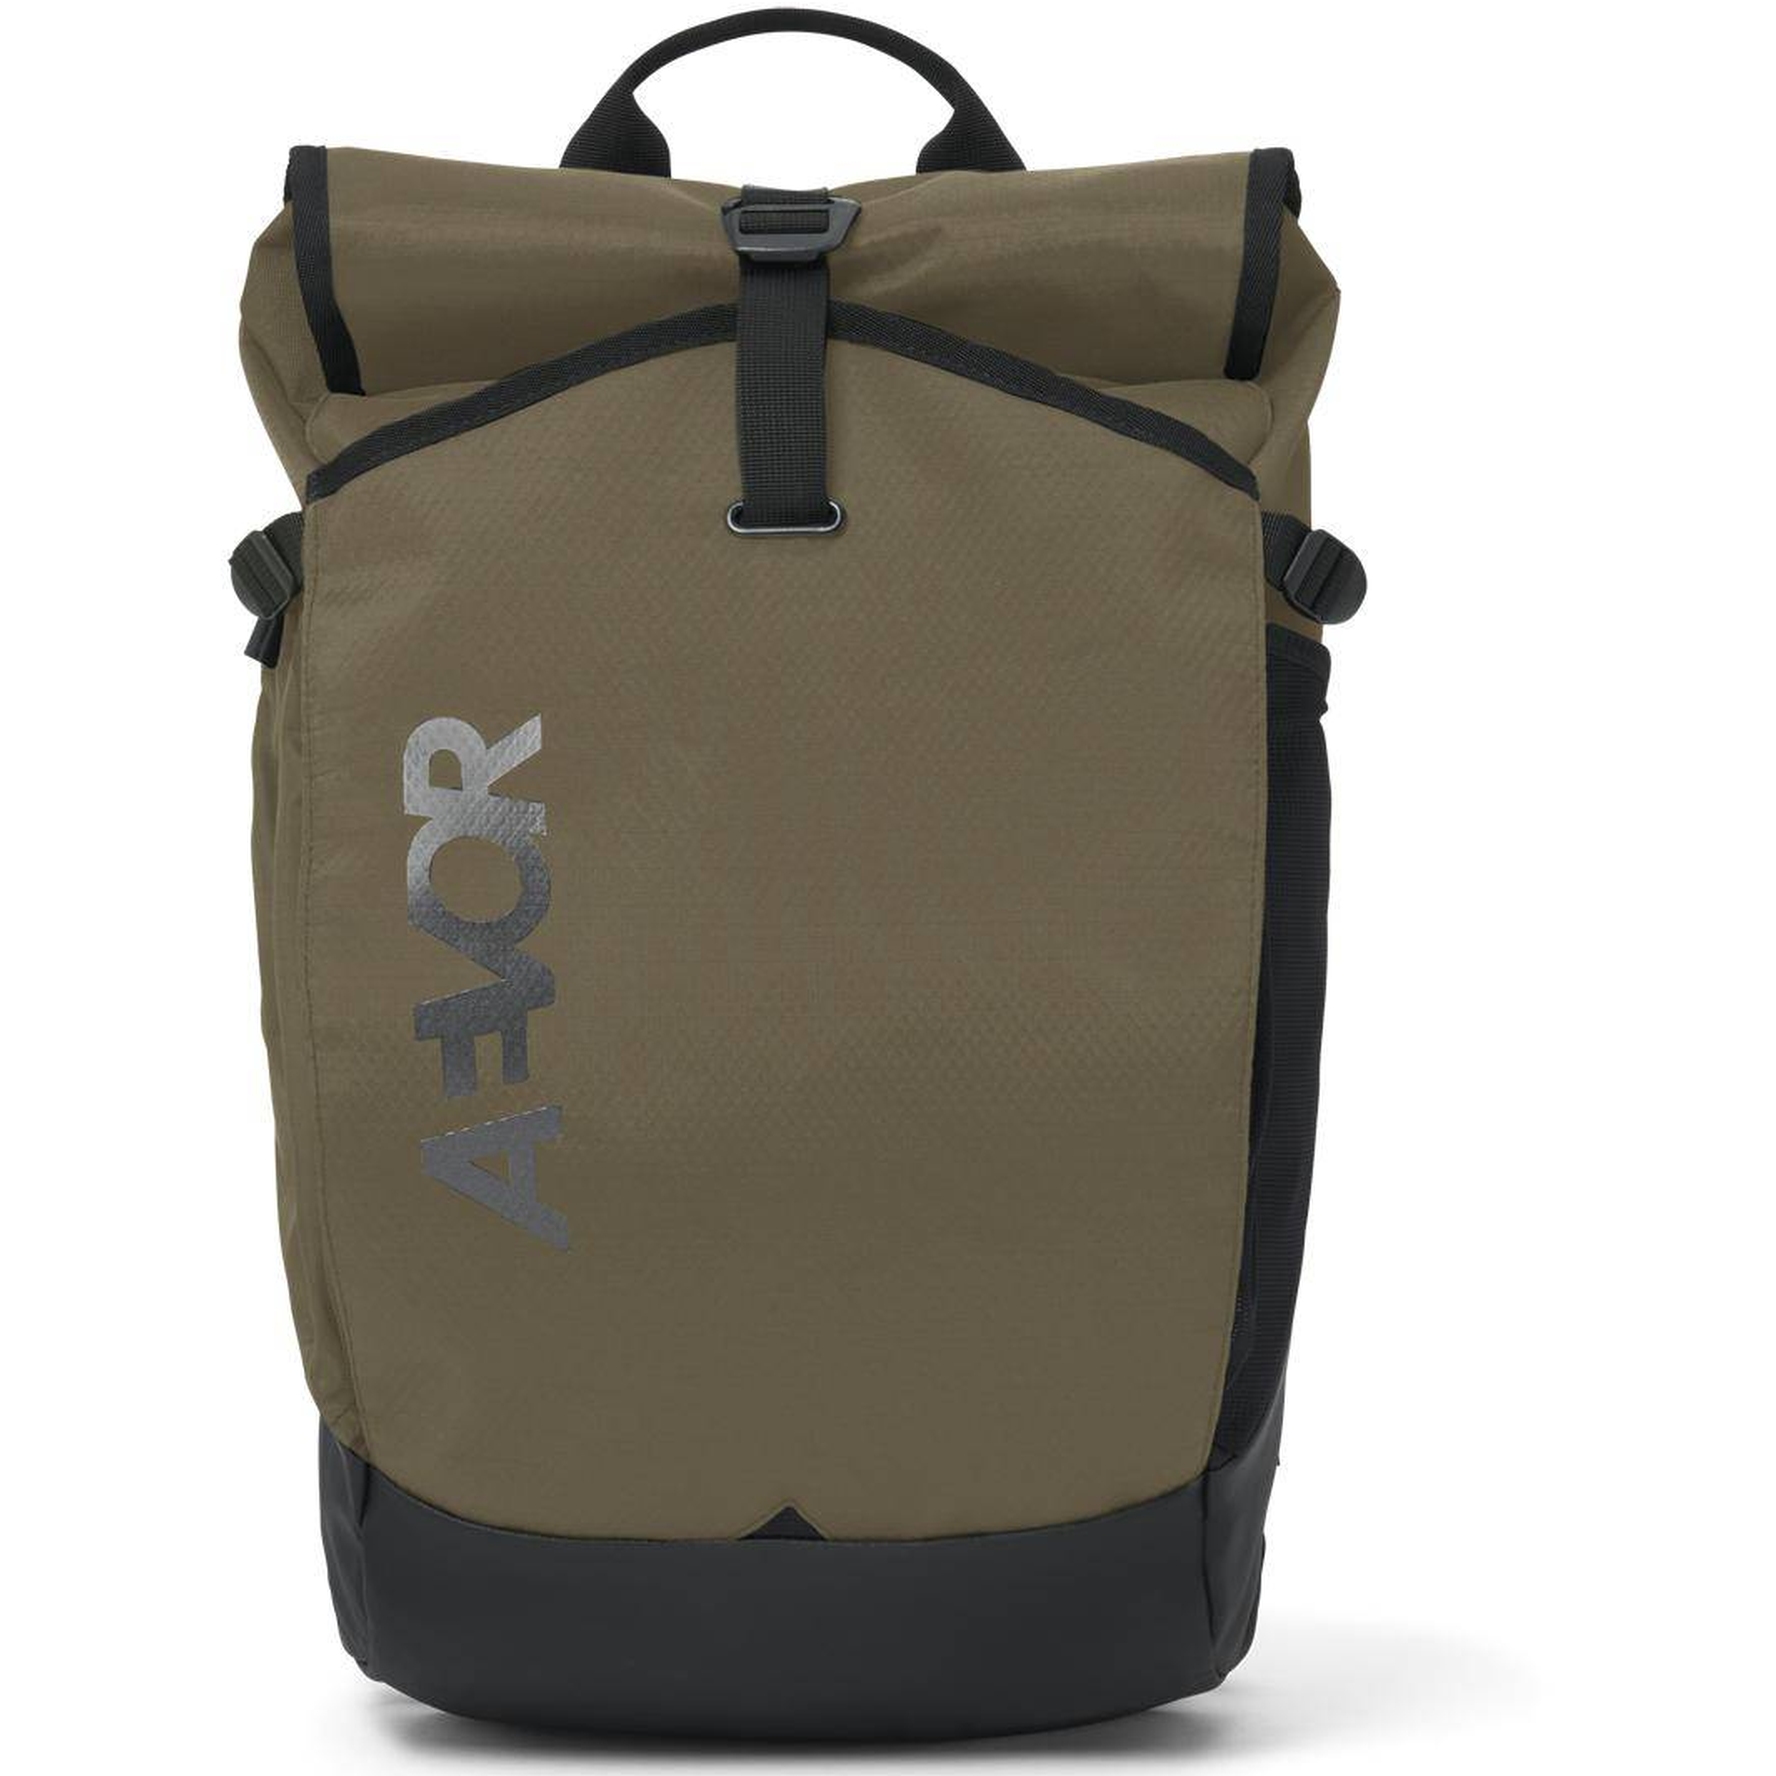 Picture of AEVOR Roll Pack 28L Backpack - Proof Olive Gold